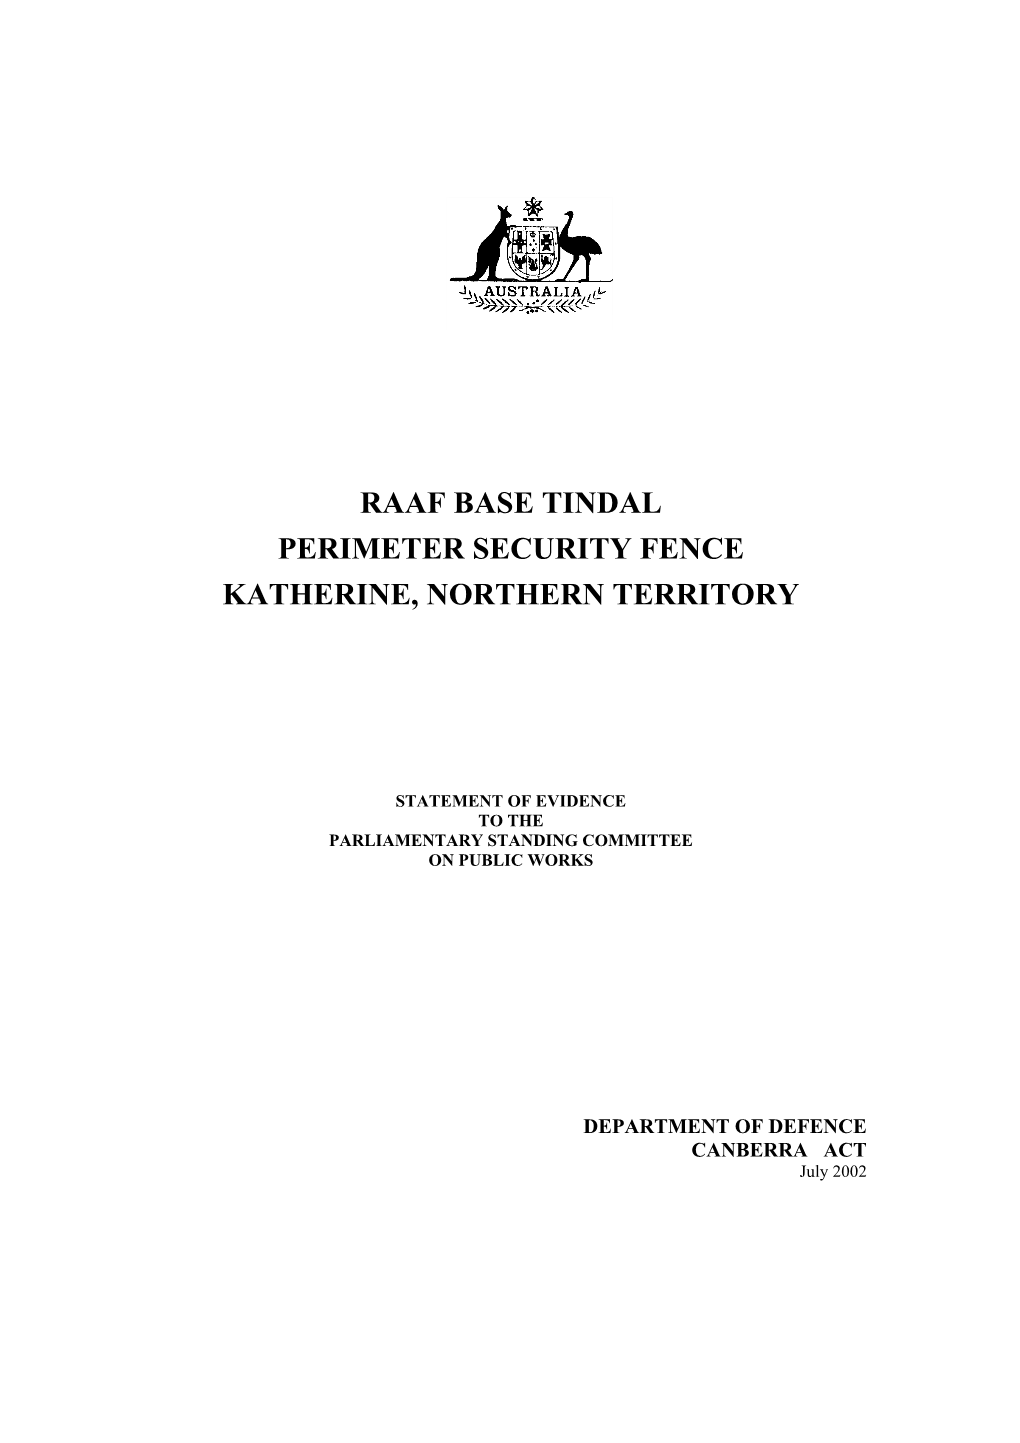 Raaf Base Tindal Perimeter Security Fence Katherine, Northern Territory